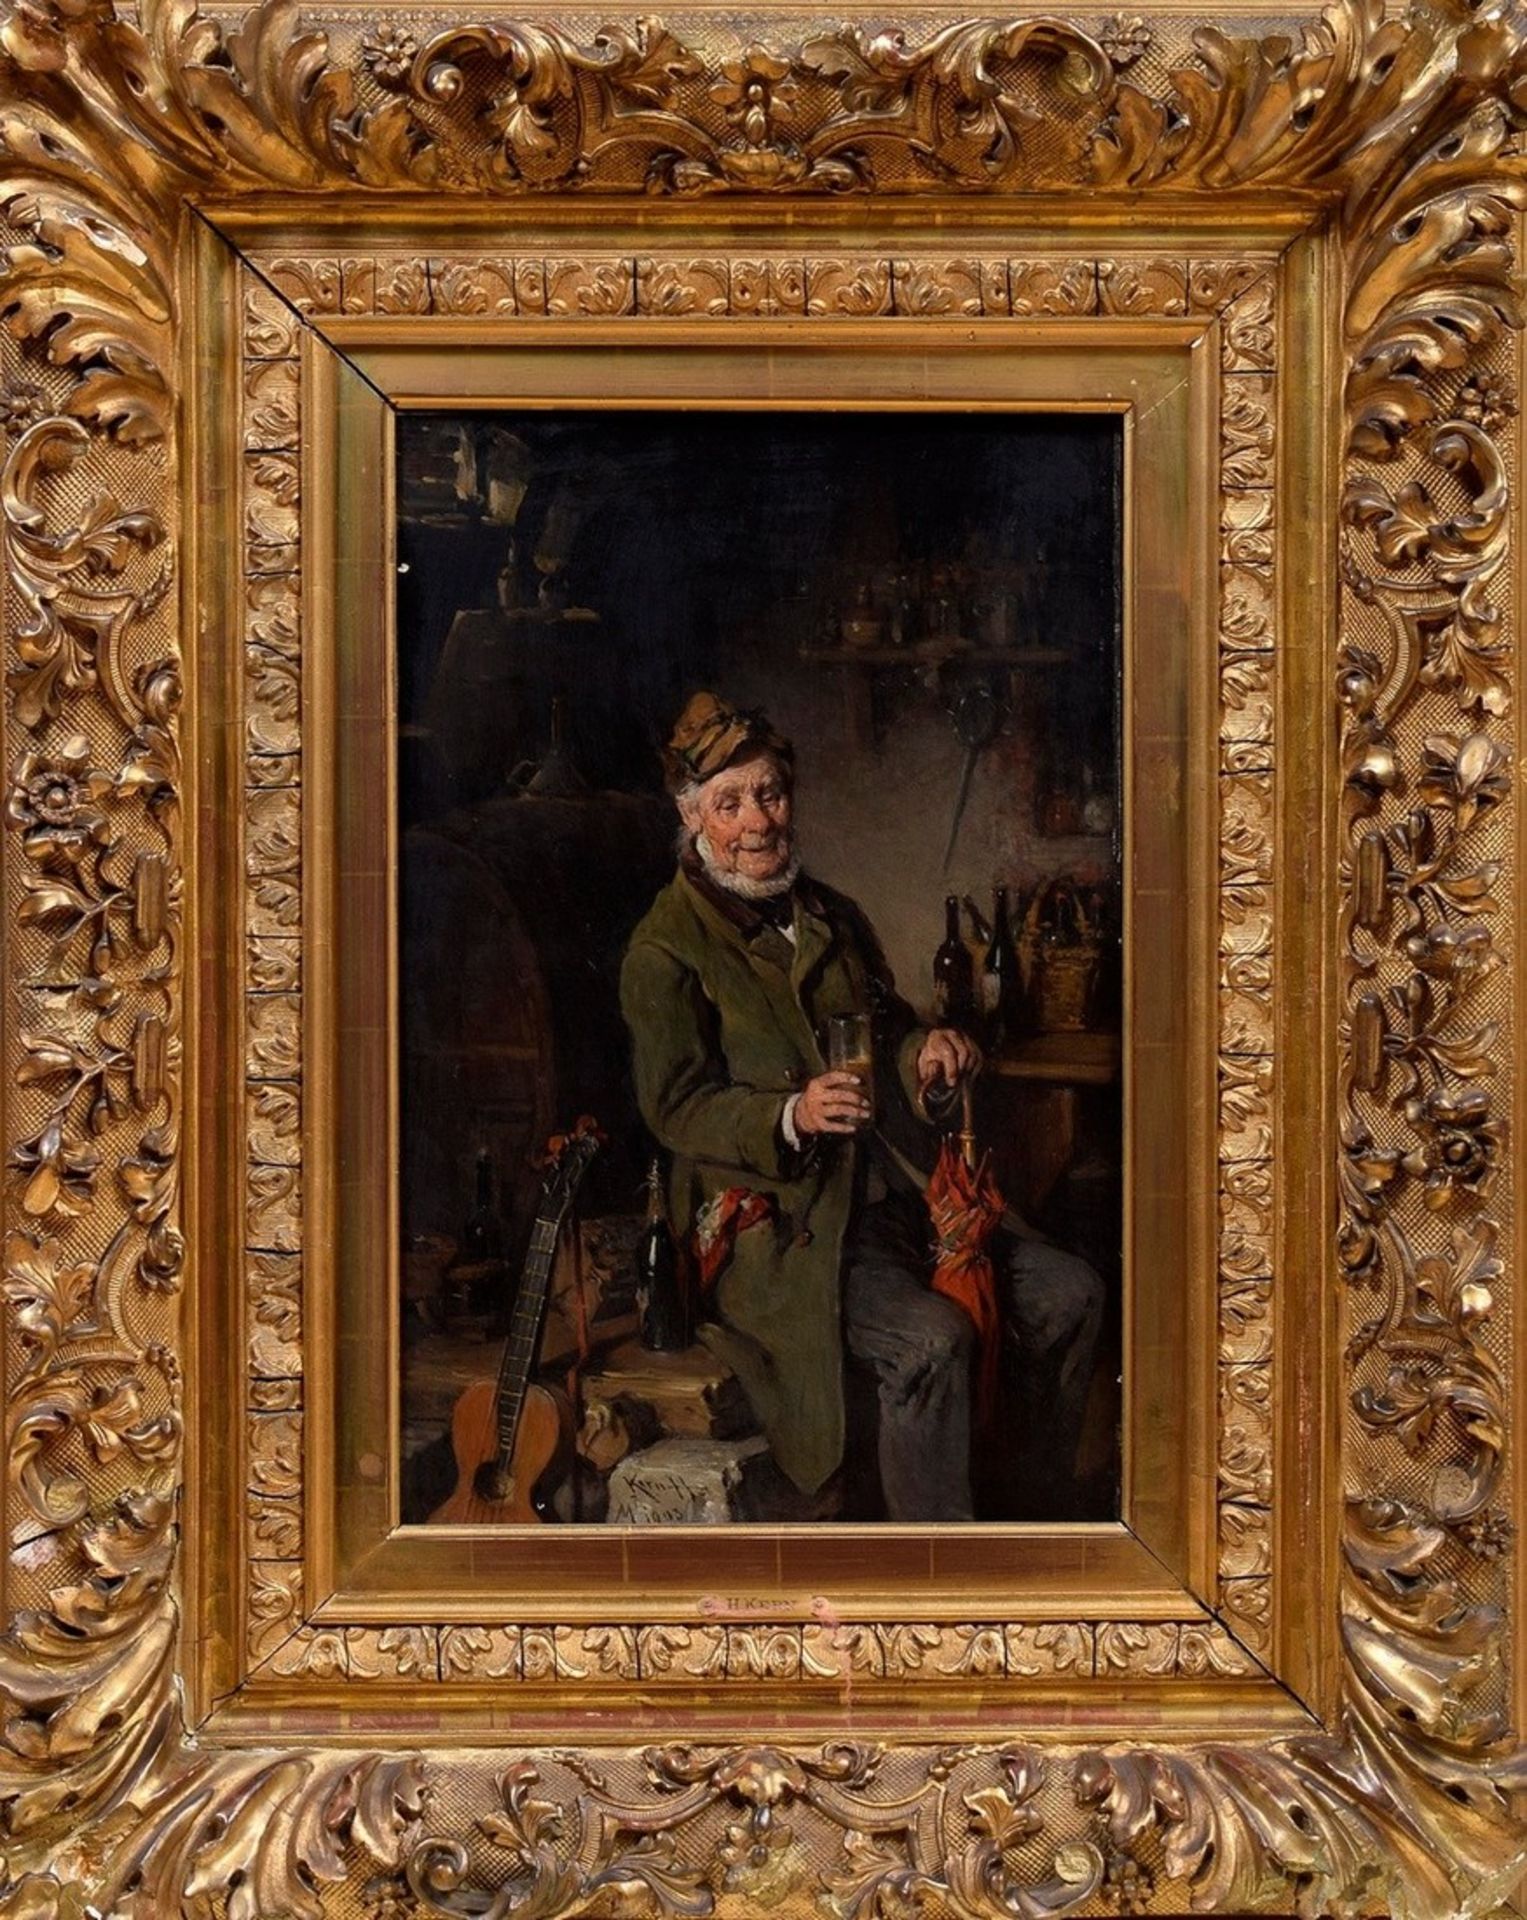 Pair of Kern, Hermann (1838-1912) "Drinking Musician" 1903 and "Toasting Botanist", oil/wood, each  - Image 11 of 23